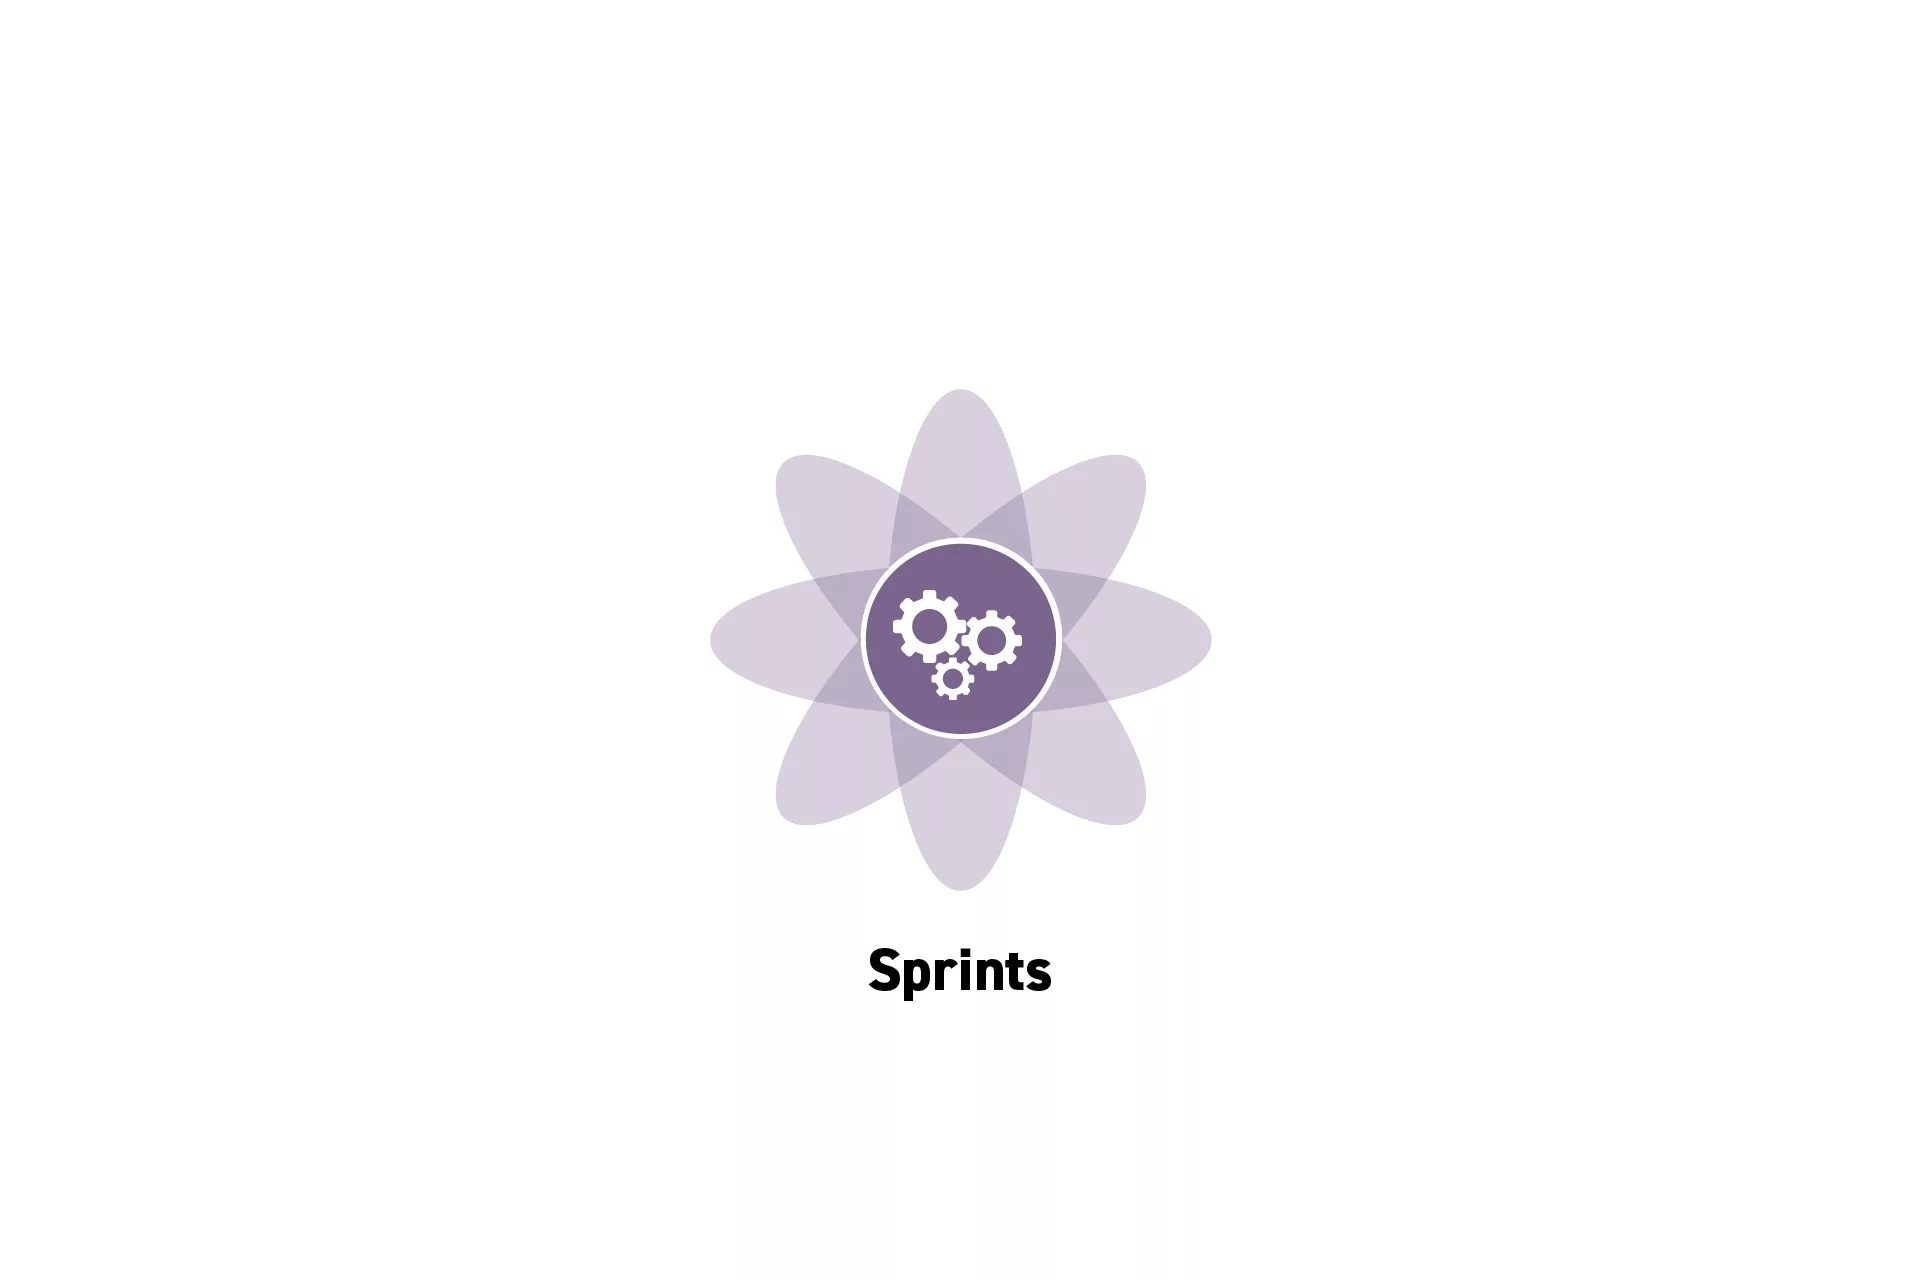 <p></p>
<p>A flower that represents Project Management with the text “Sprints” beneath it.</p>
<p></p>